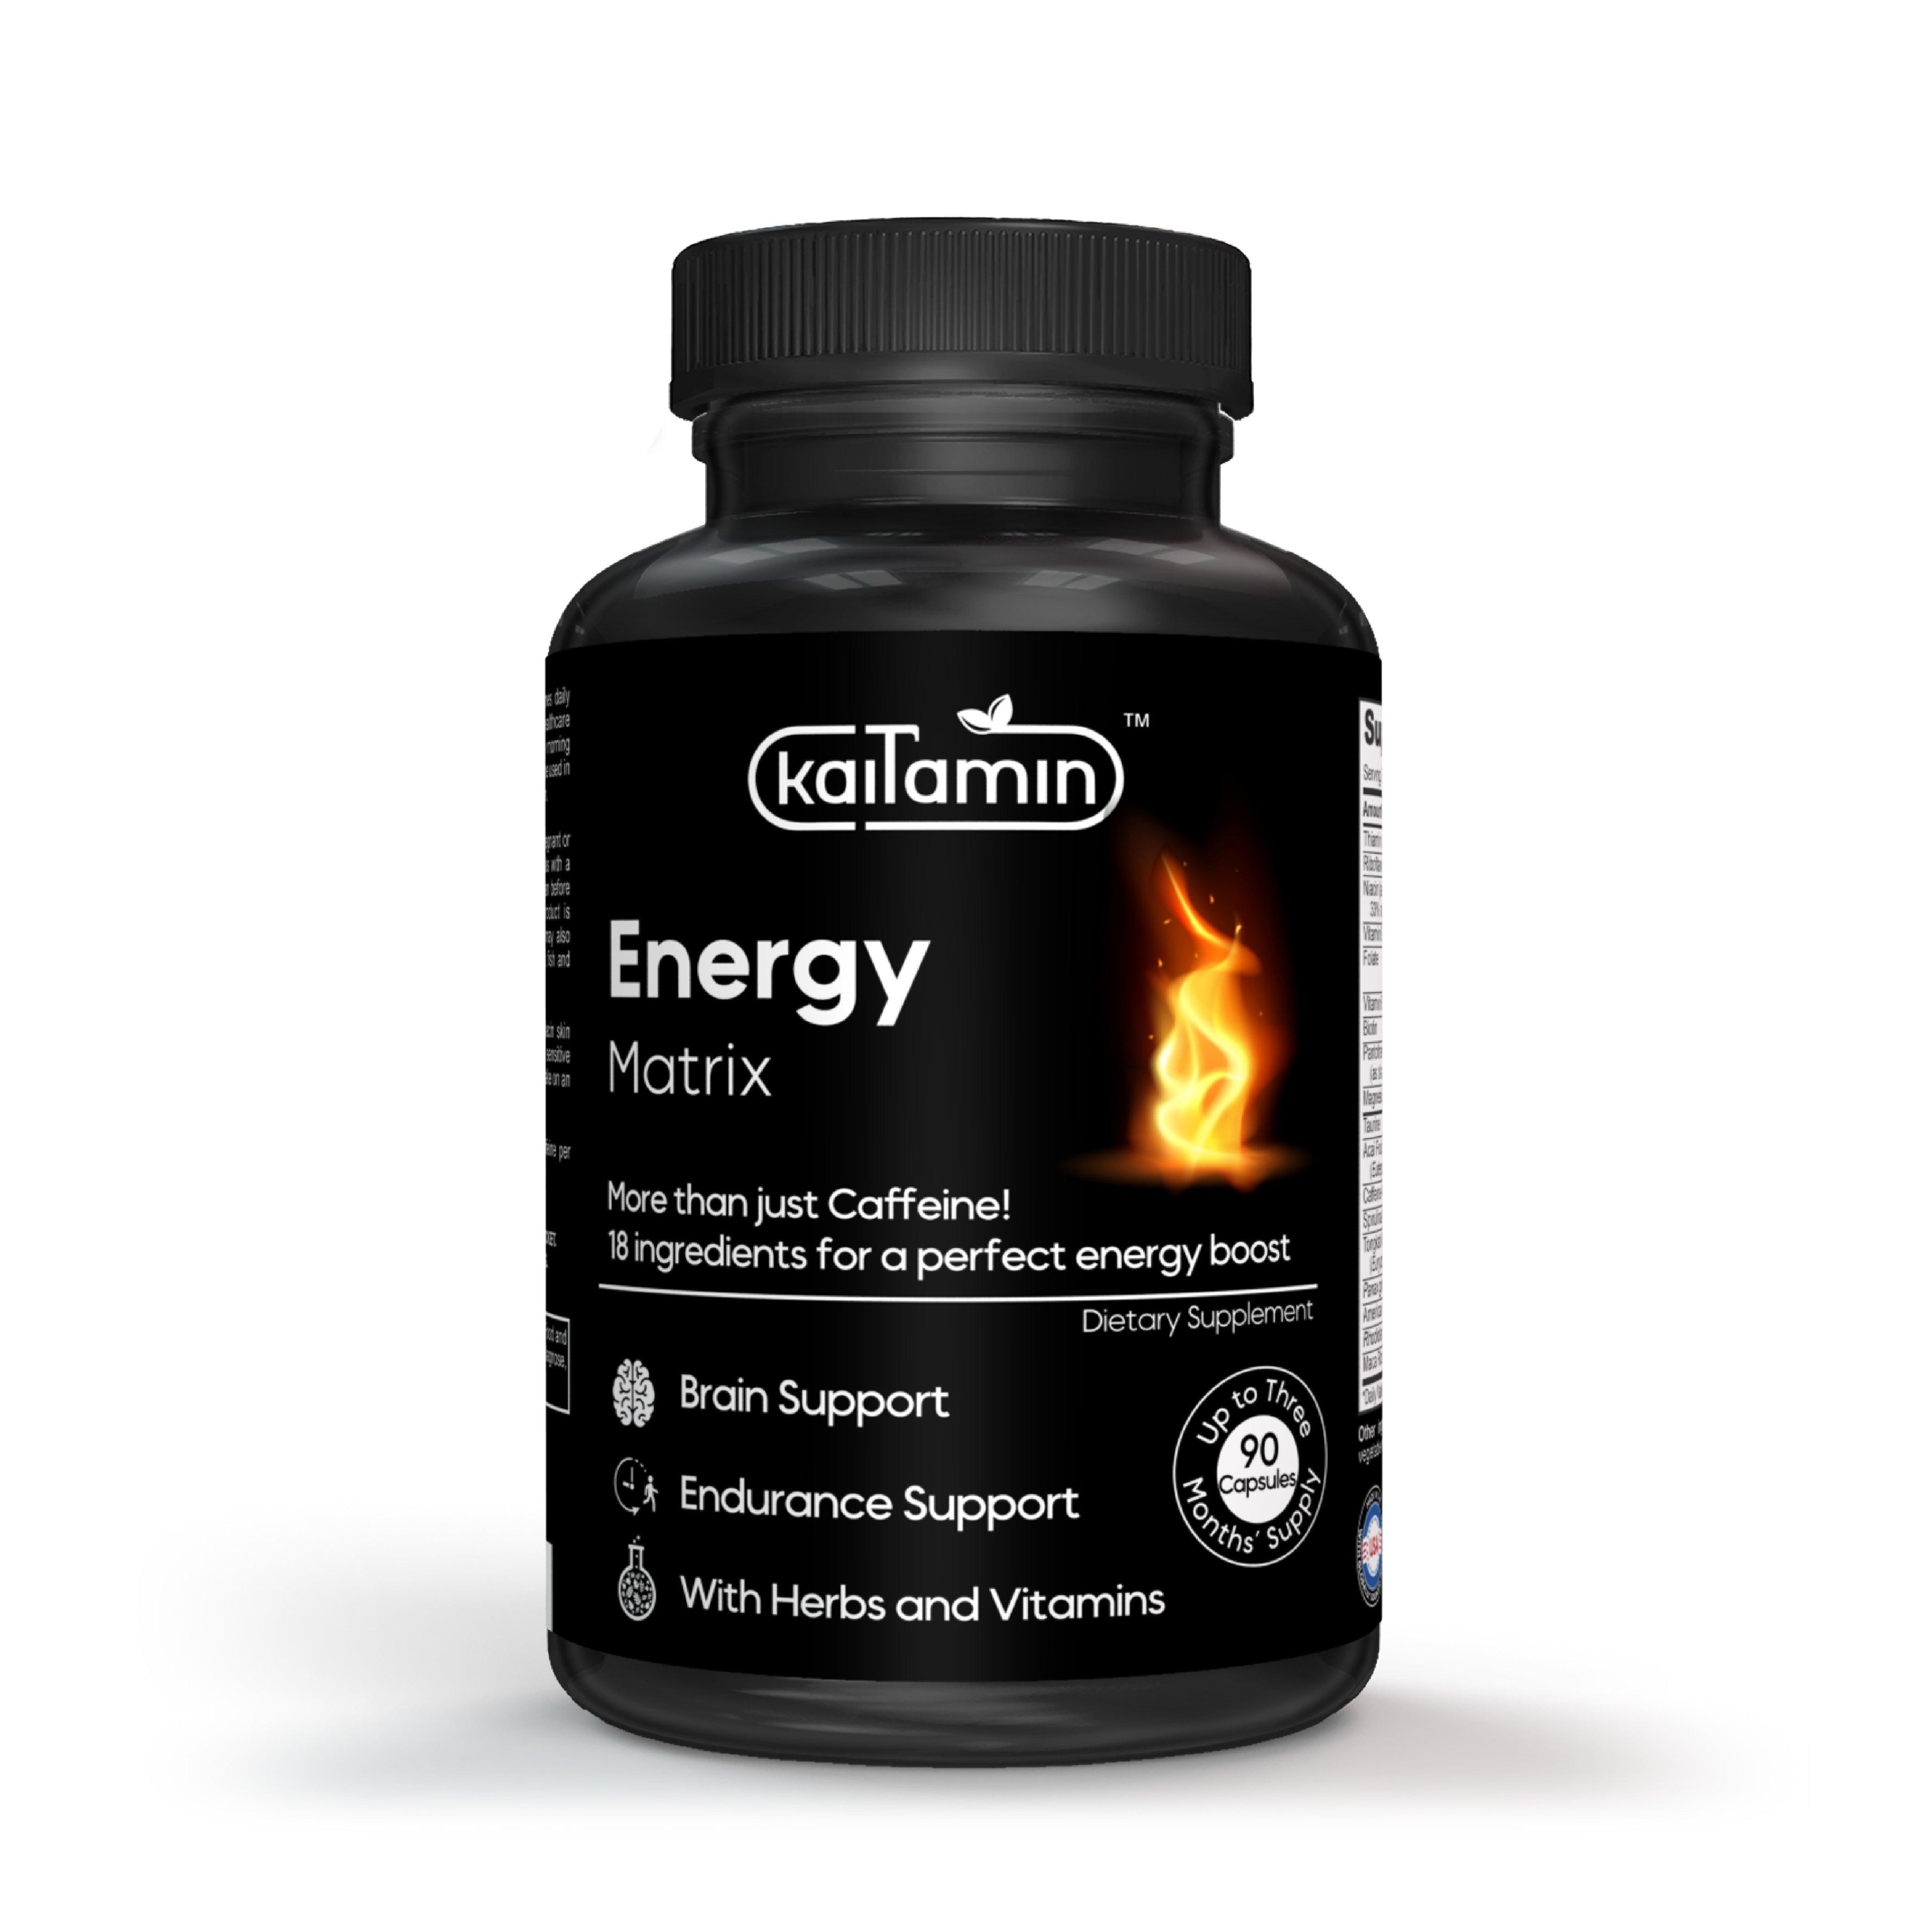 Energy Matrix – Super Capsule for boosting energy - 90 Capsules - Kaitamin